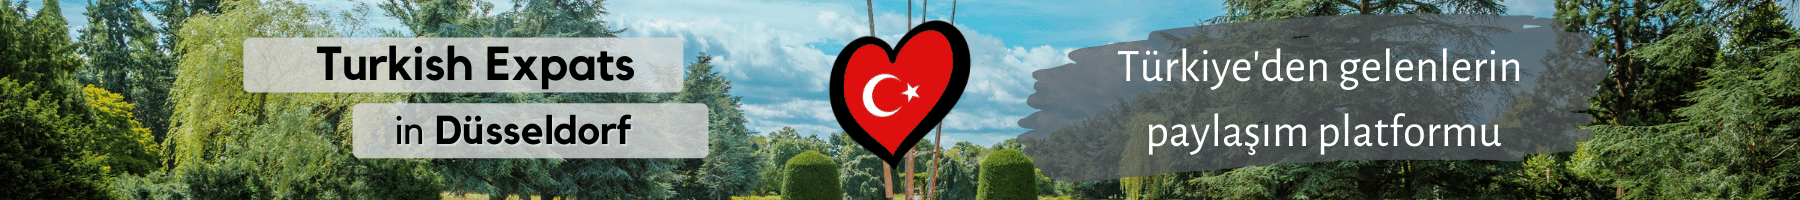 Turkish Expats in Dusseldorf